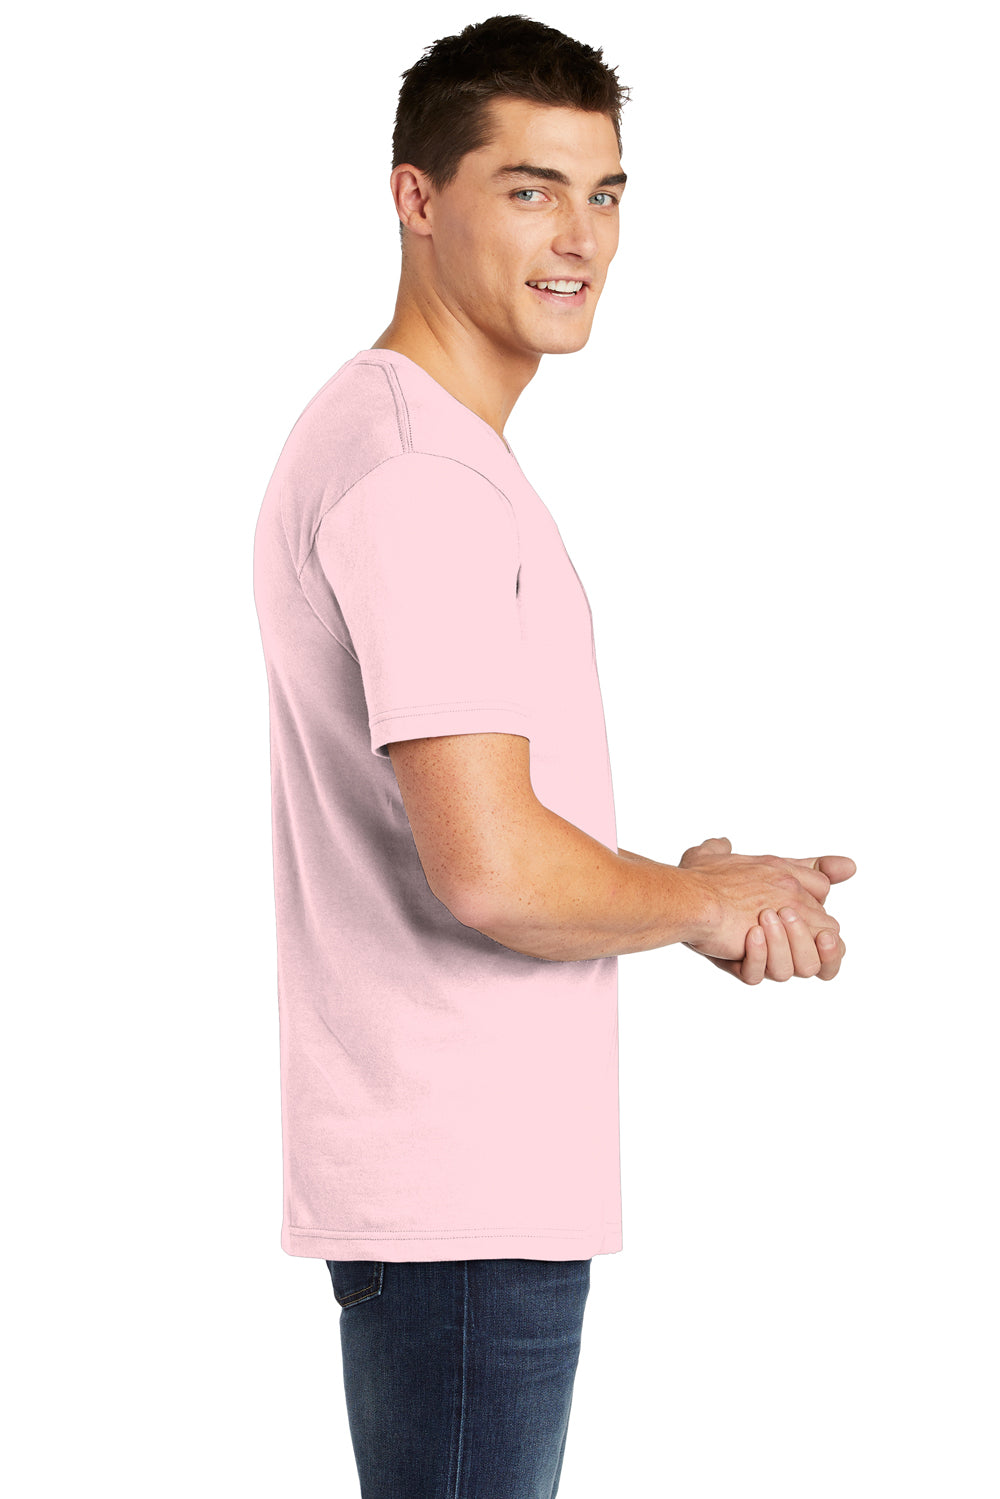 American Apparel Mens Fine Jersey Short Sleeve V-Neck T-Shirt Light Pink Side